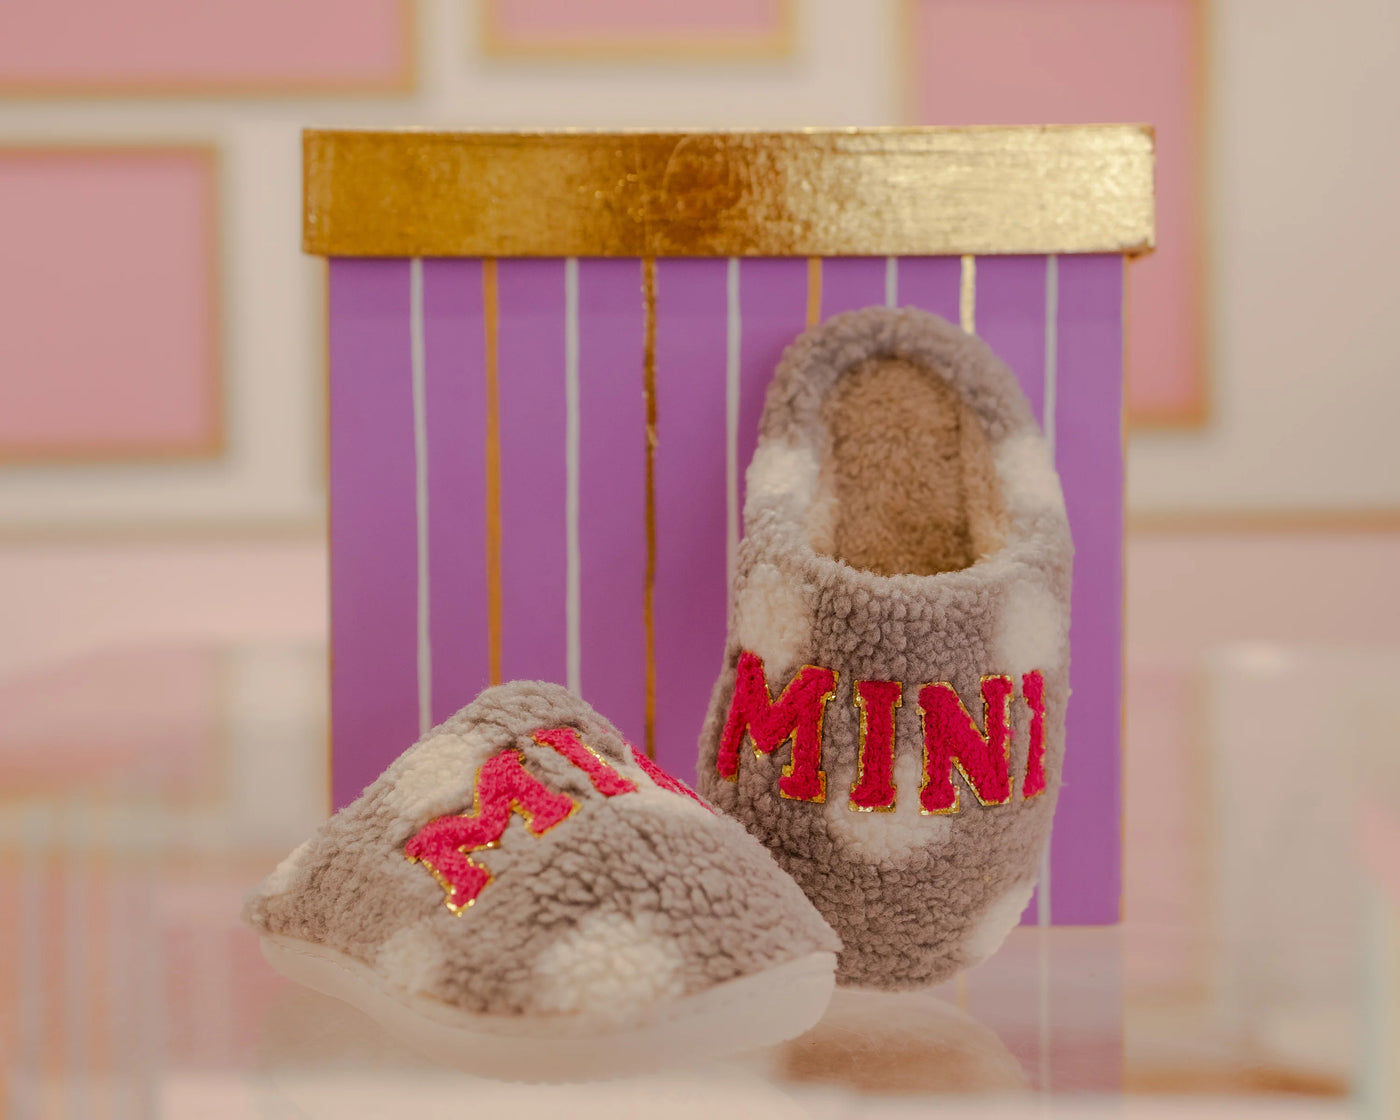 Mini Slippers